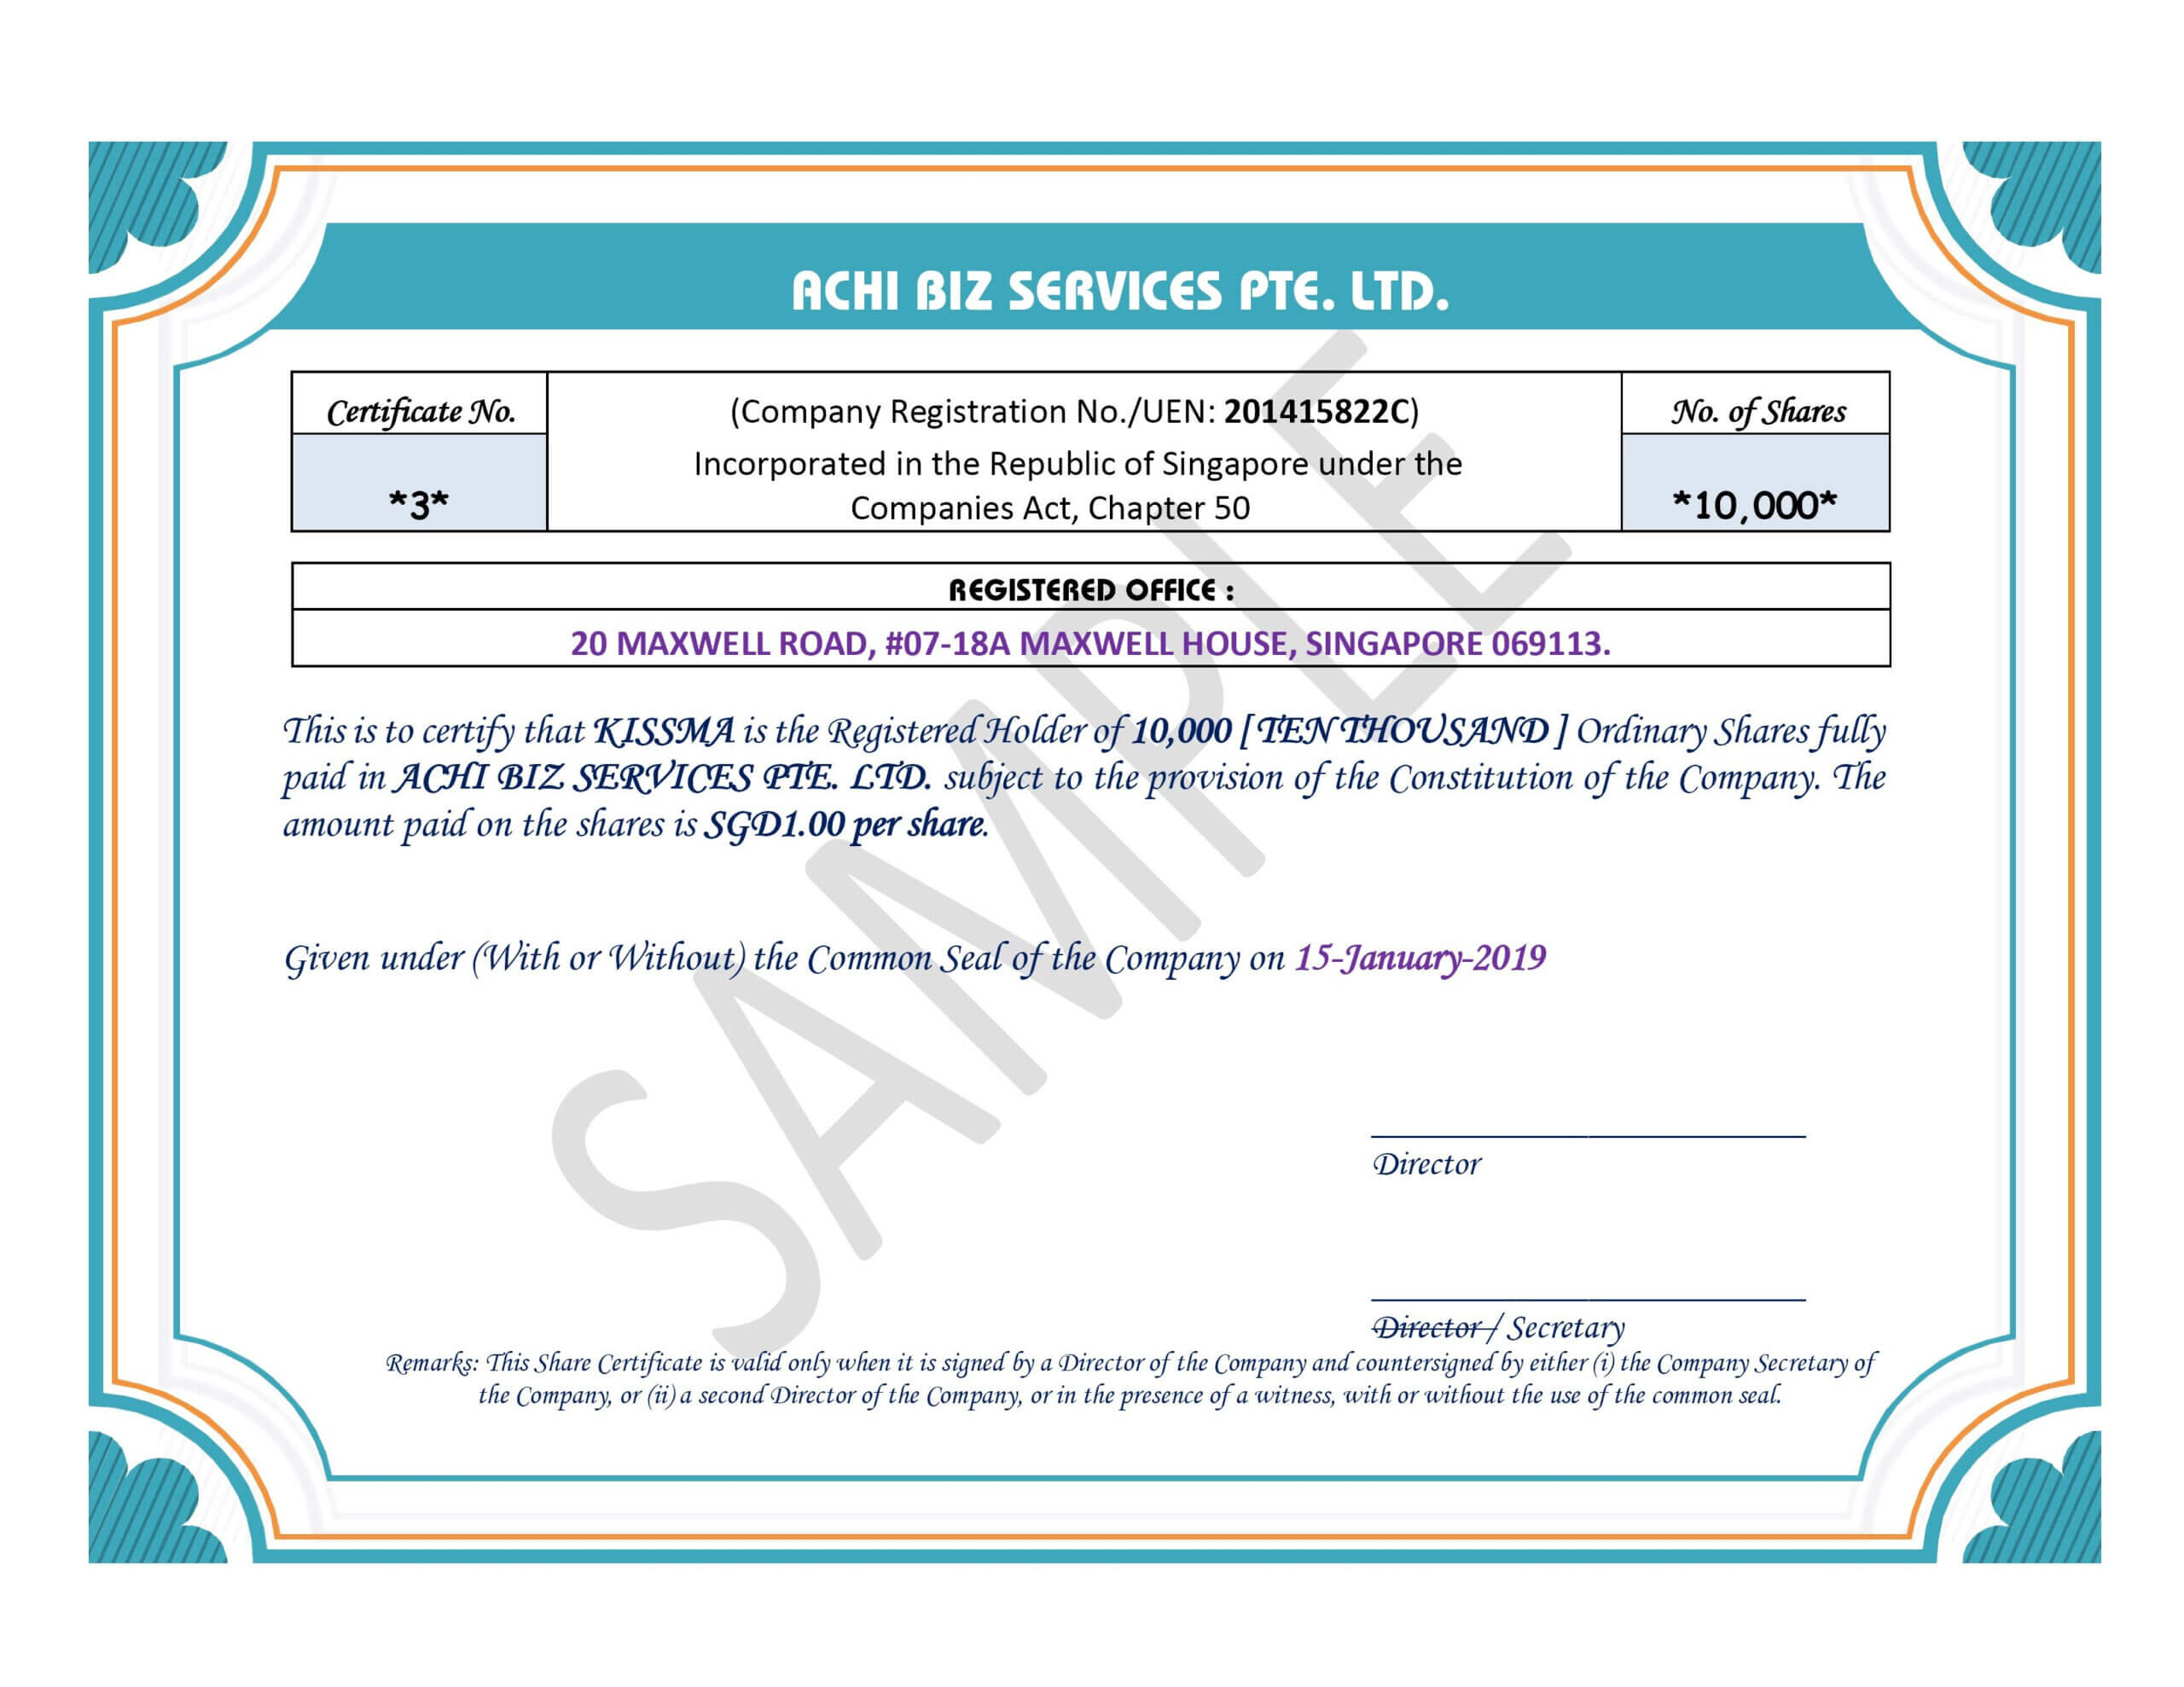 share-certificate-in-singapore-achibiz-for-share-certificate-template